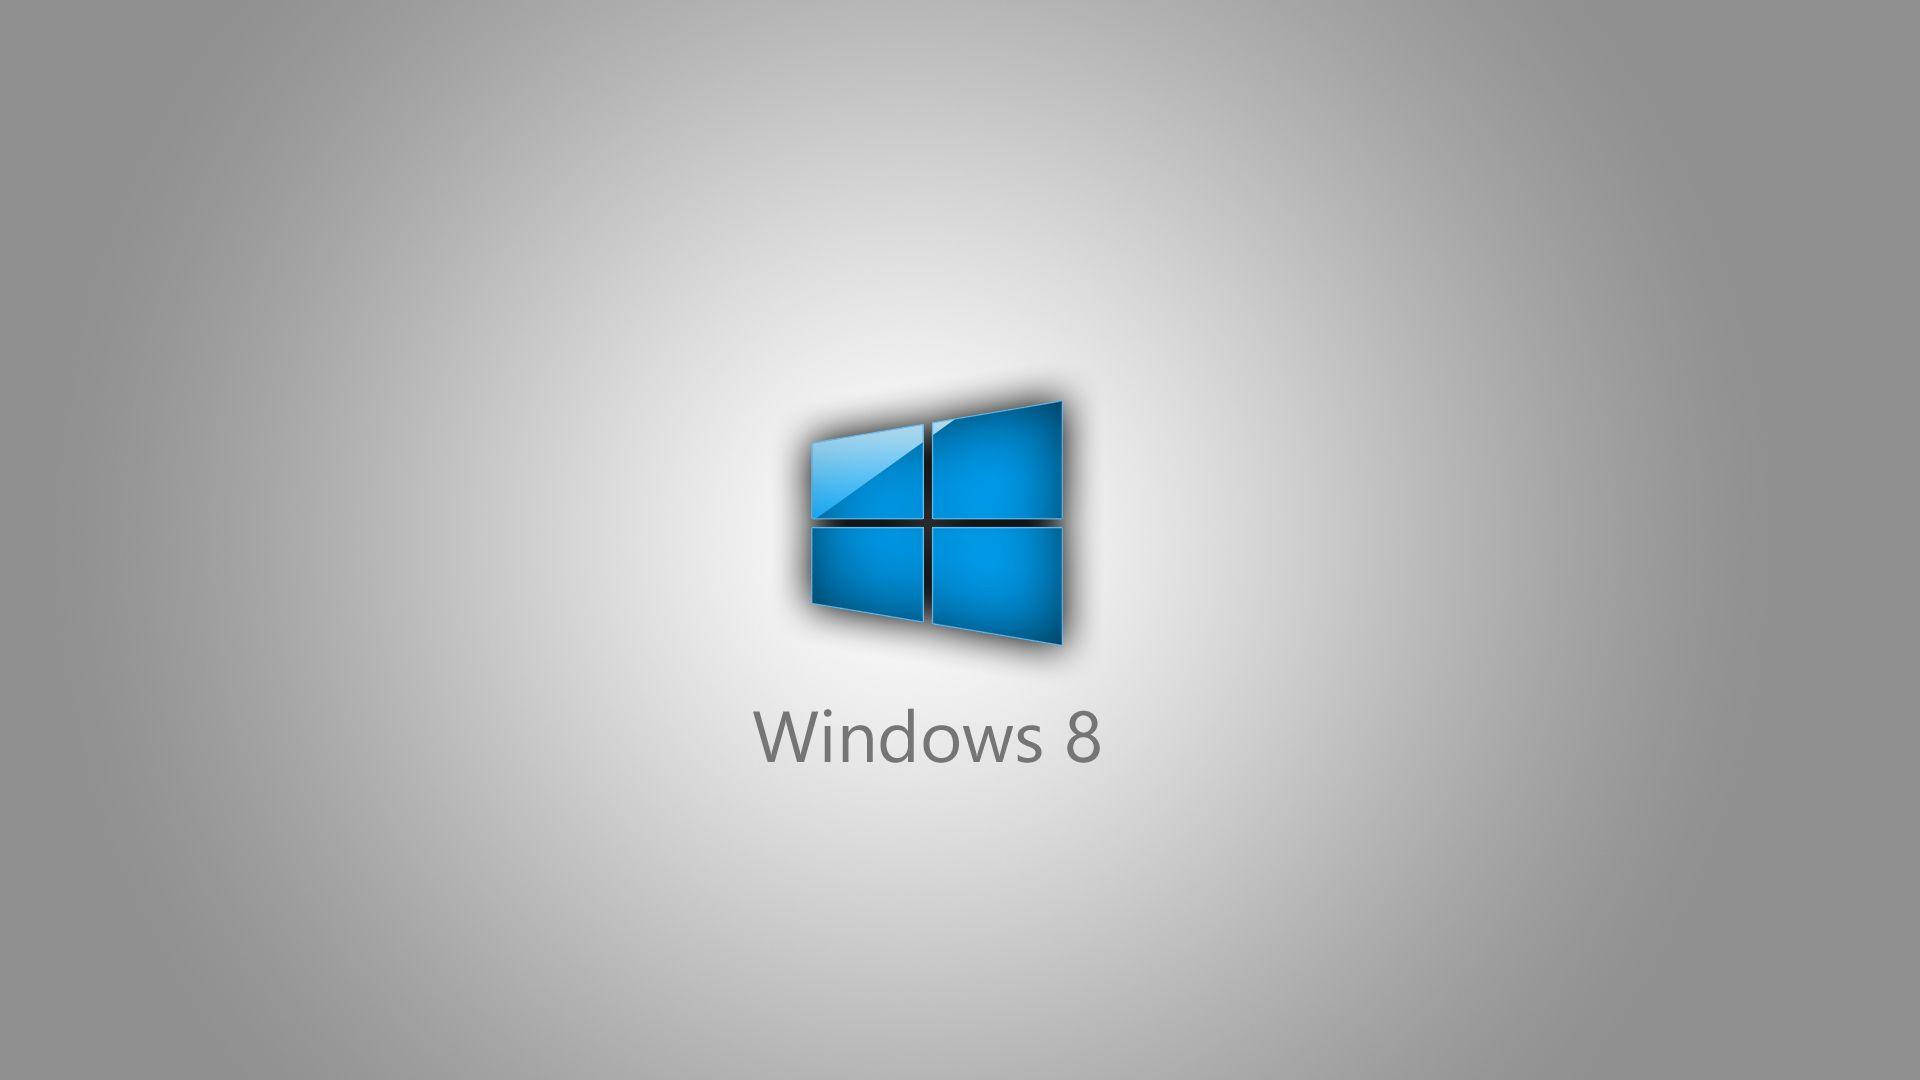 Windows 8 Logo On A White Gradient Background. Background